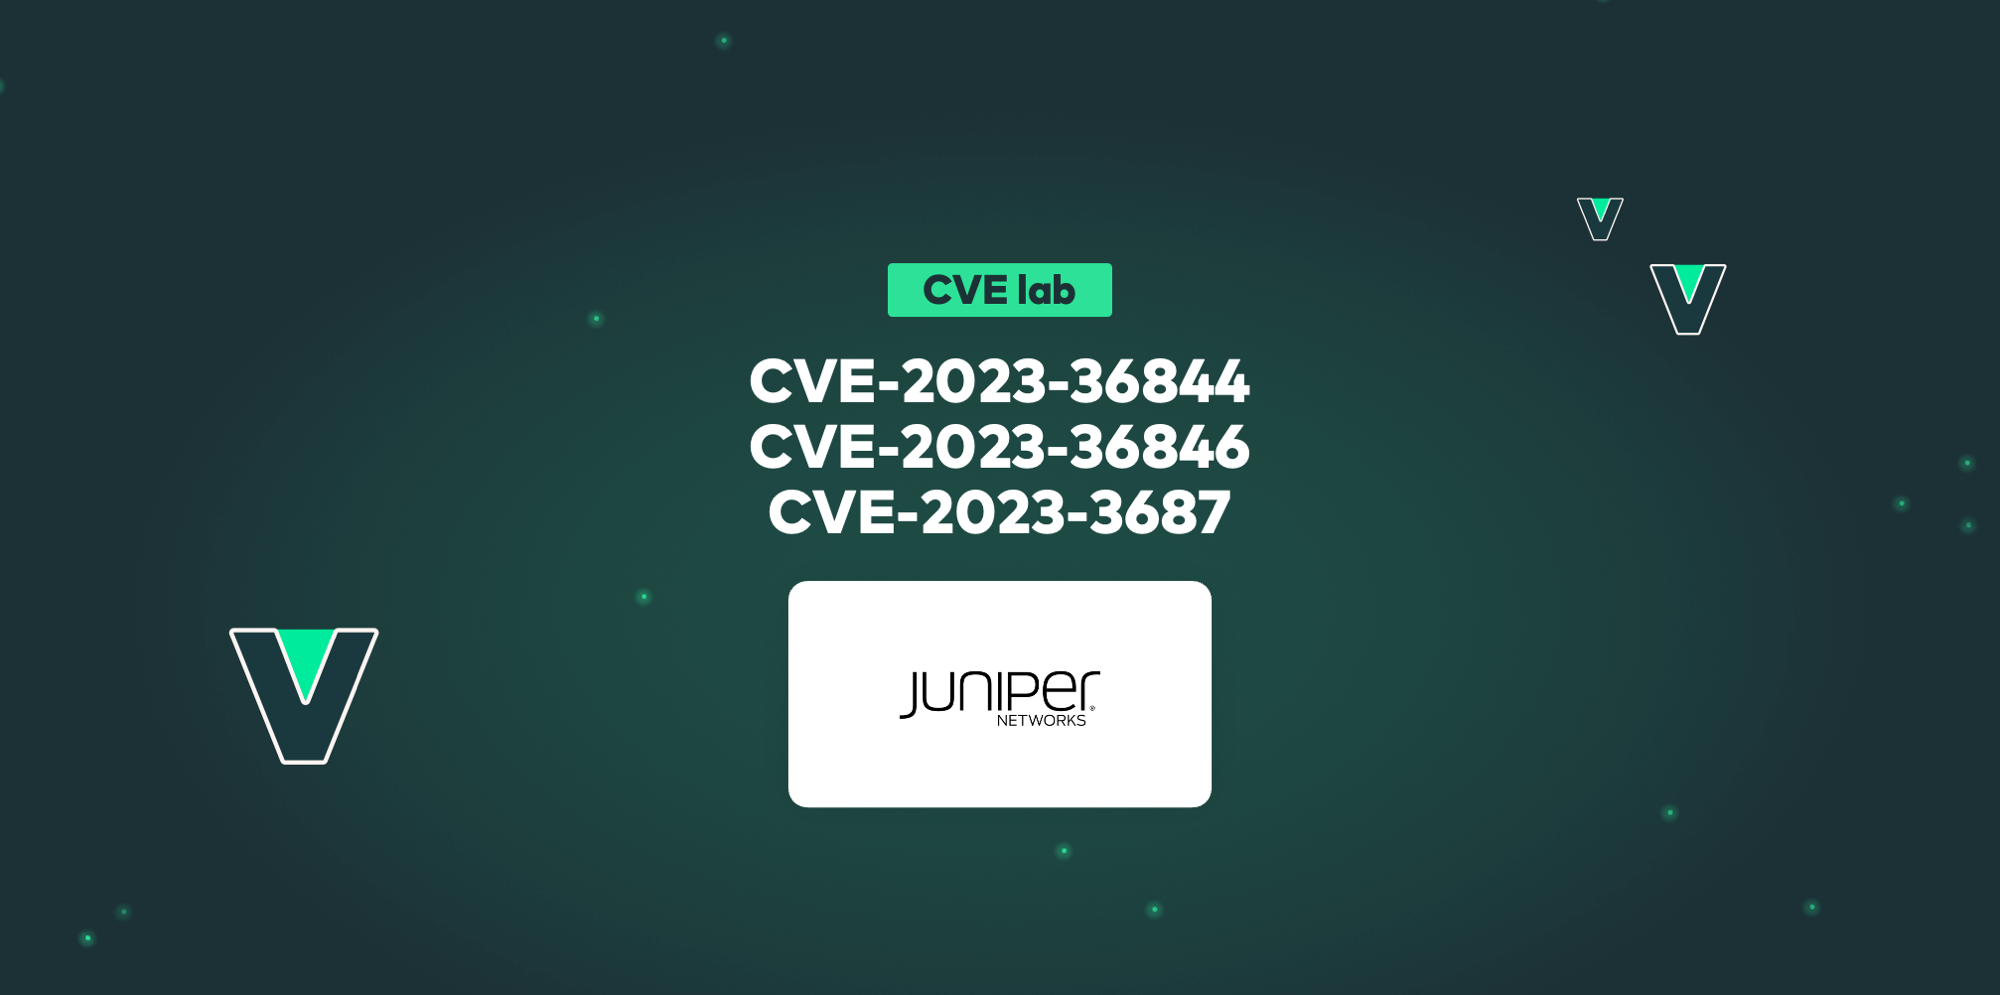 Juniper Networks Released Fixes For Critical Vulnerabilities